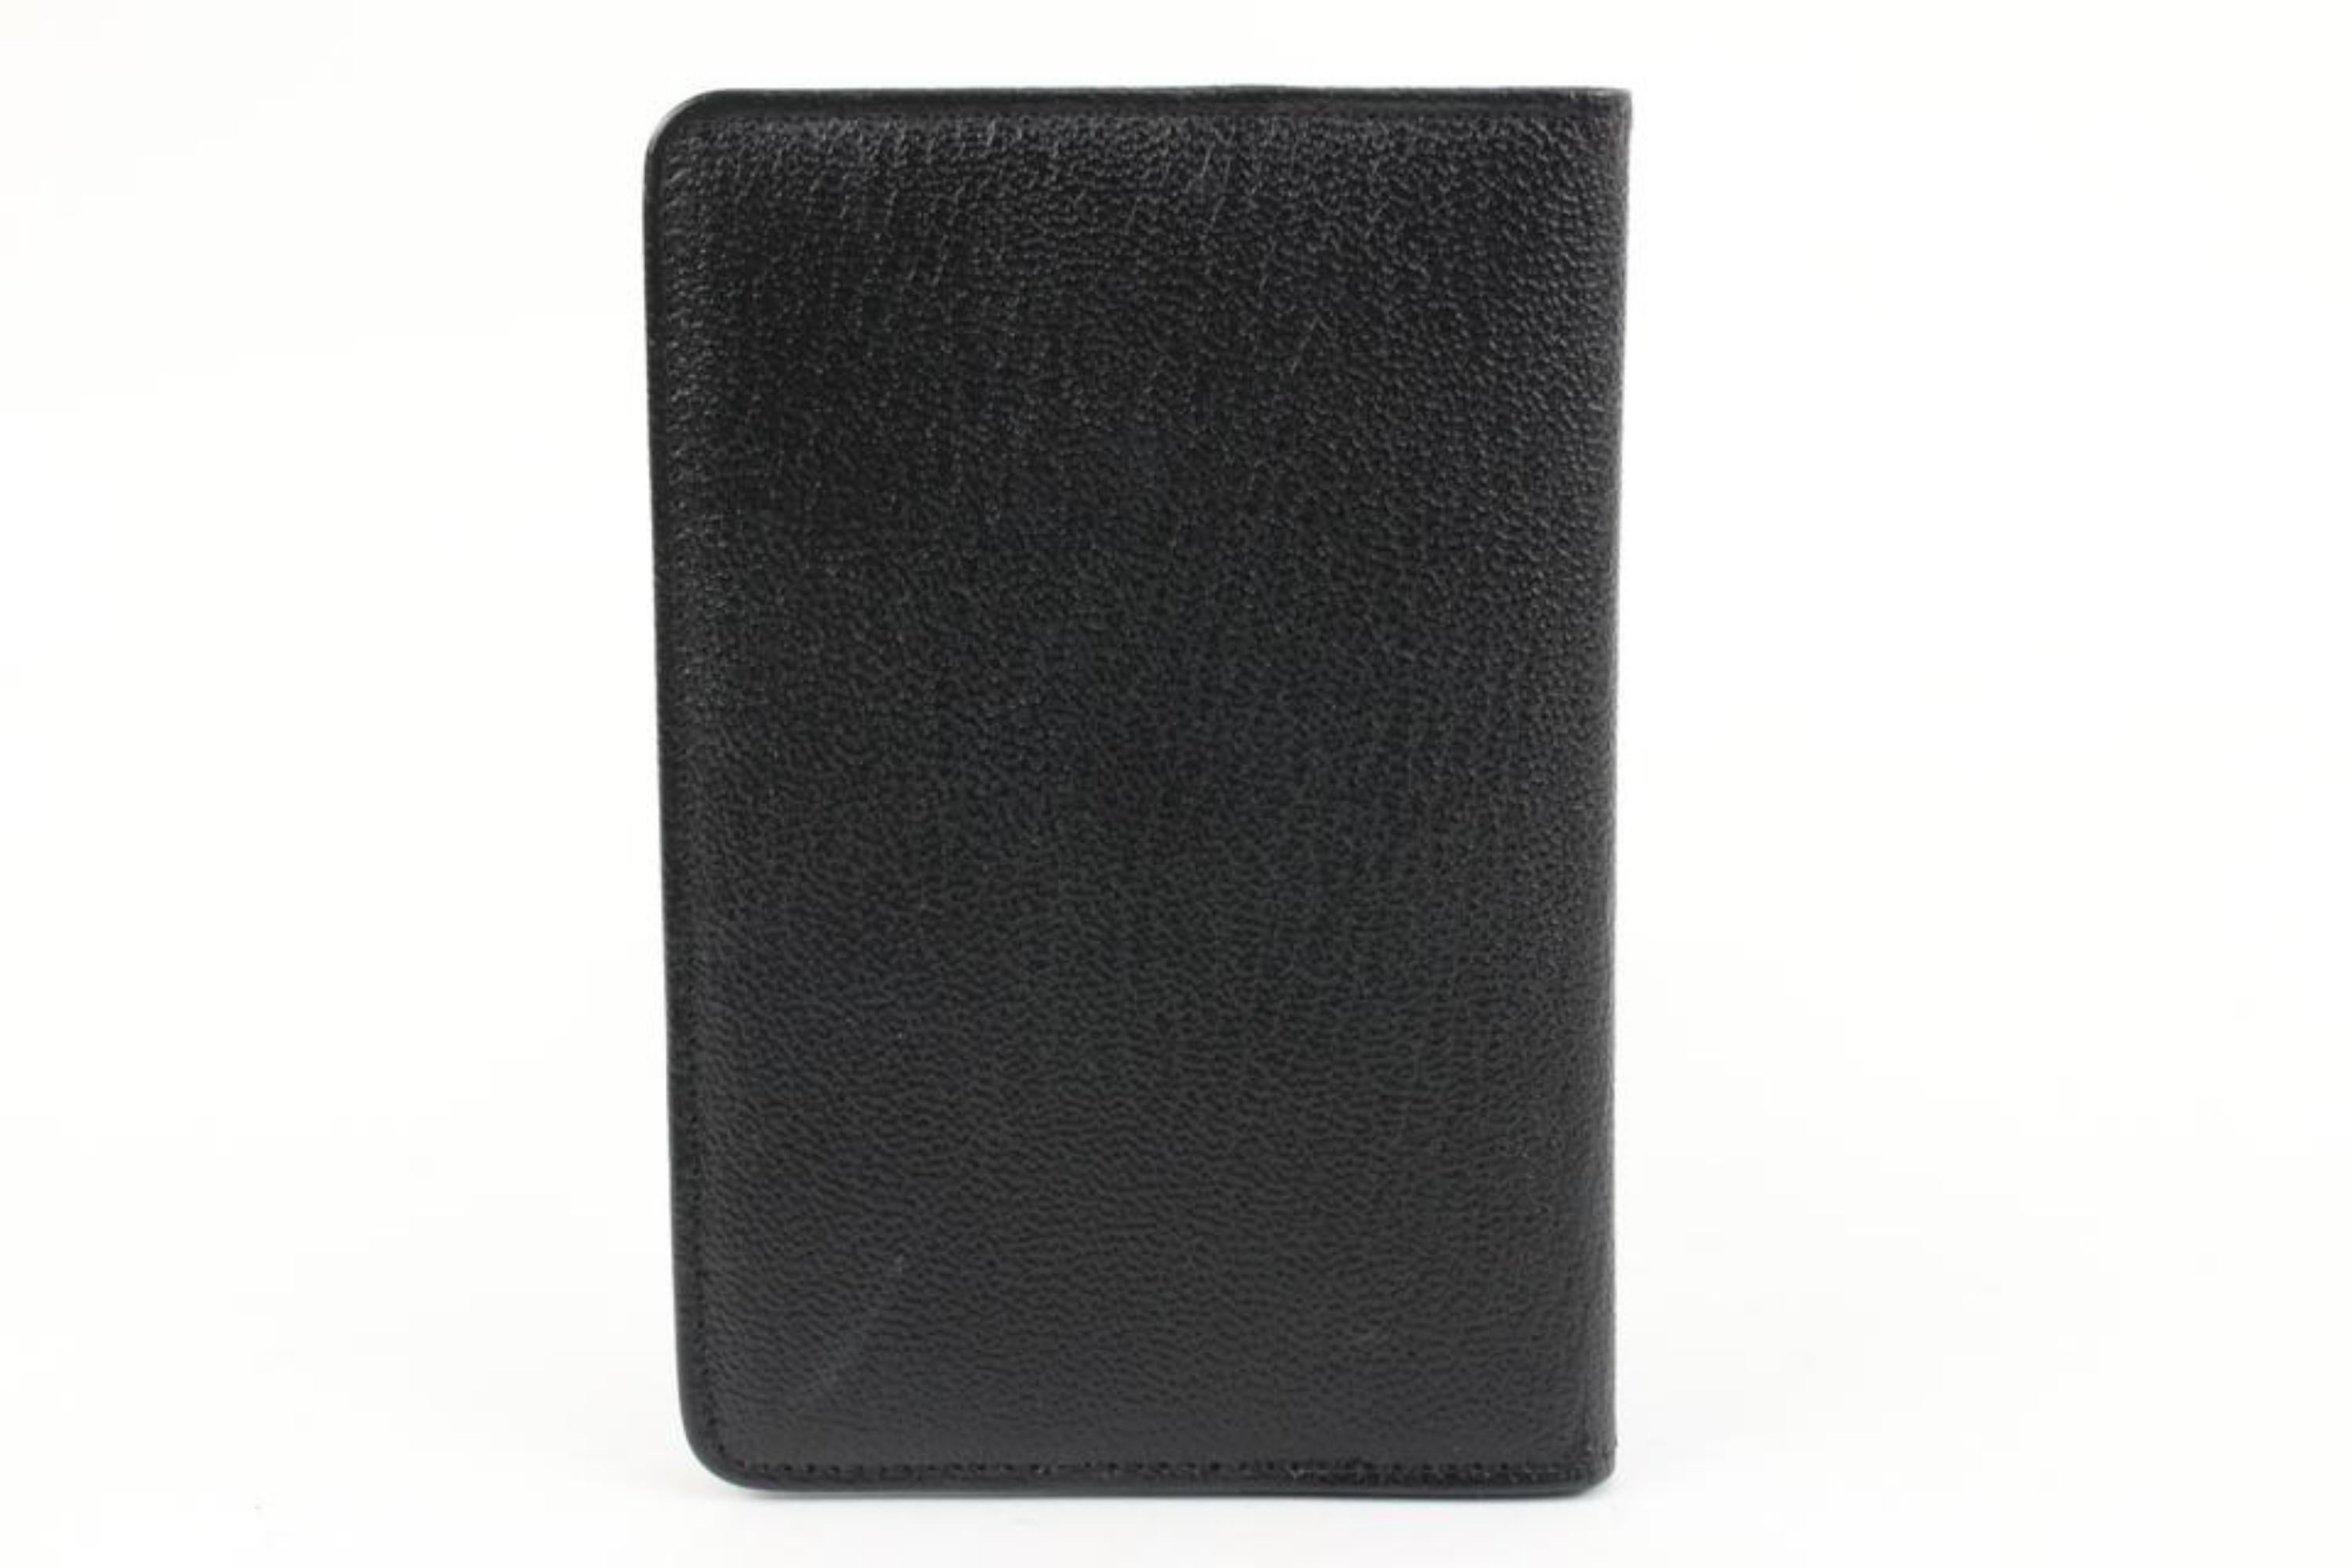 Chanel Black Calfskin Leather CC Card Holder Wallet Case 64ck225s 5